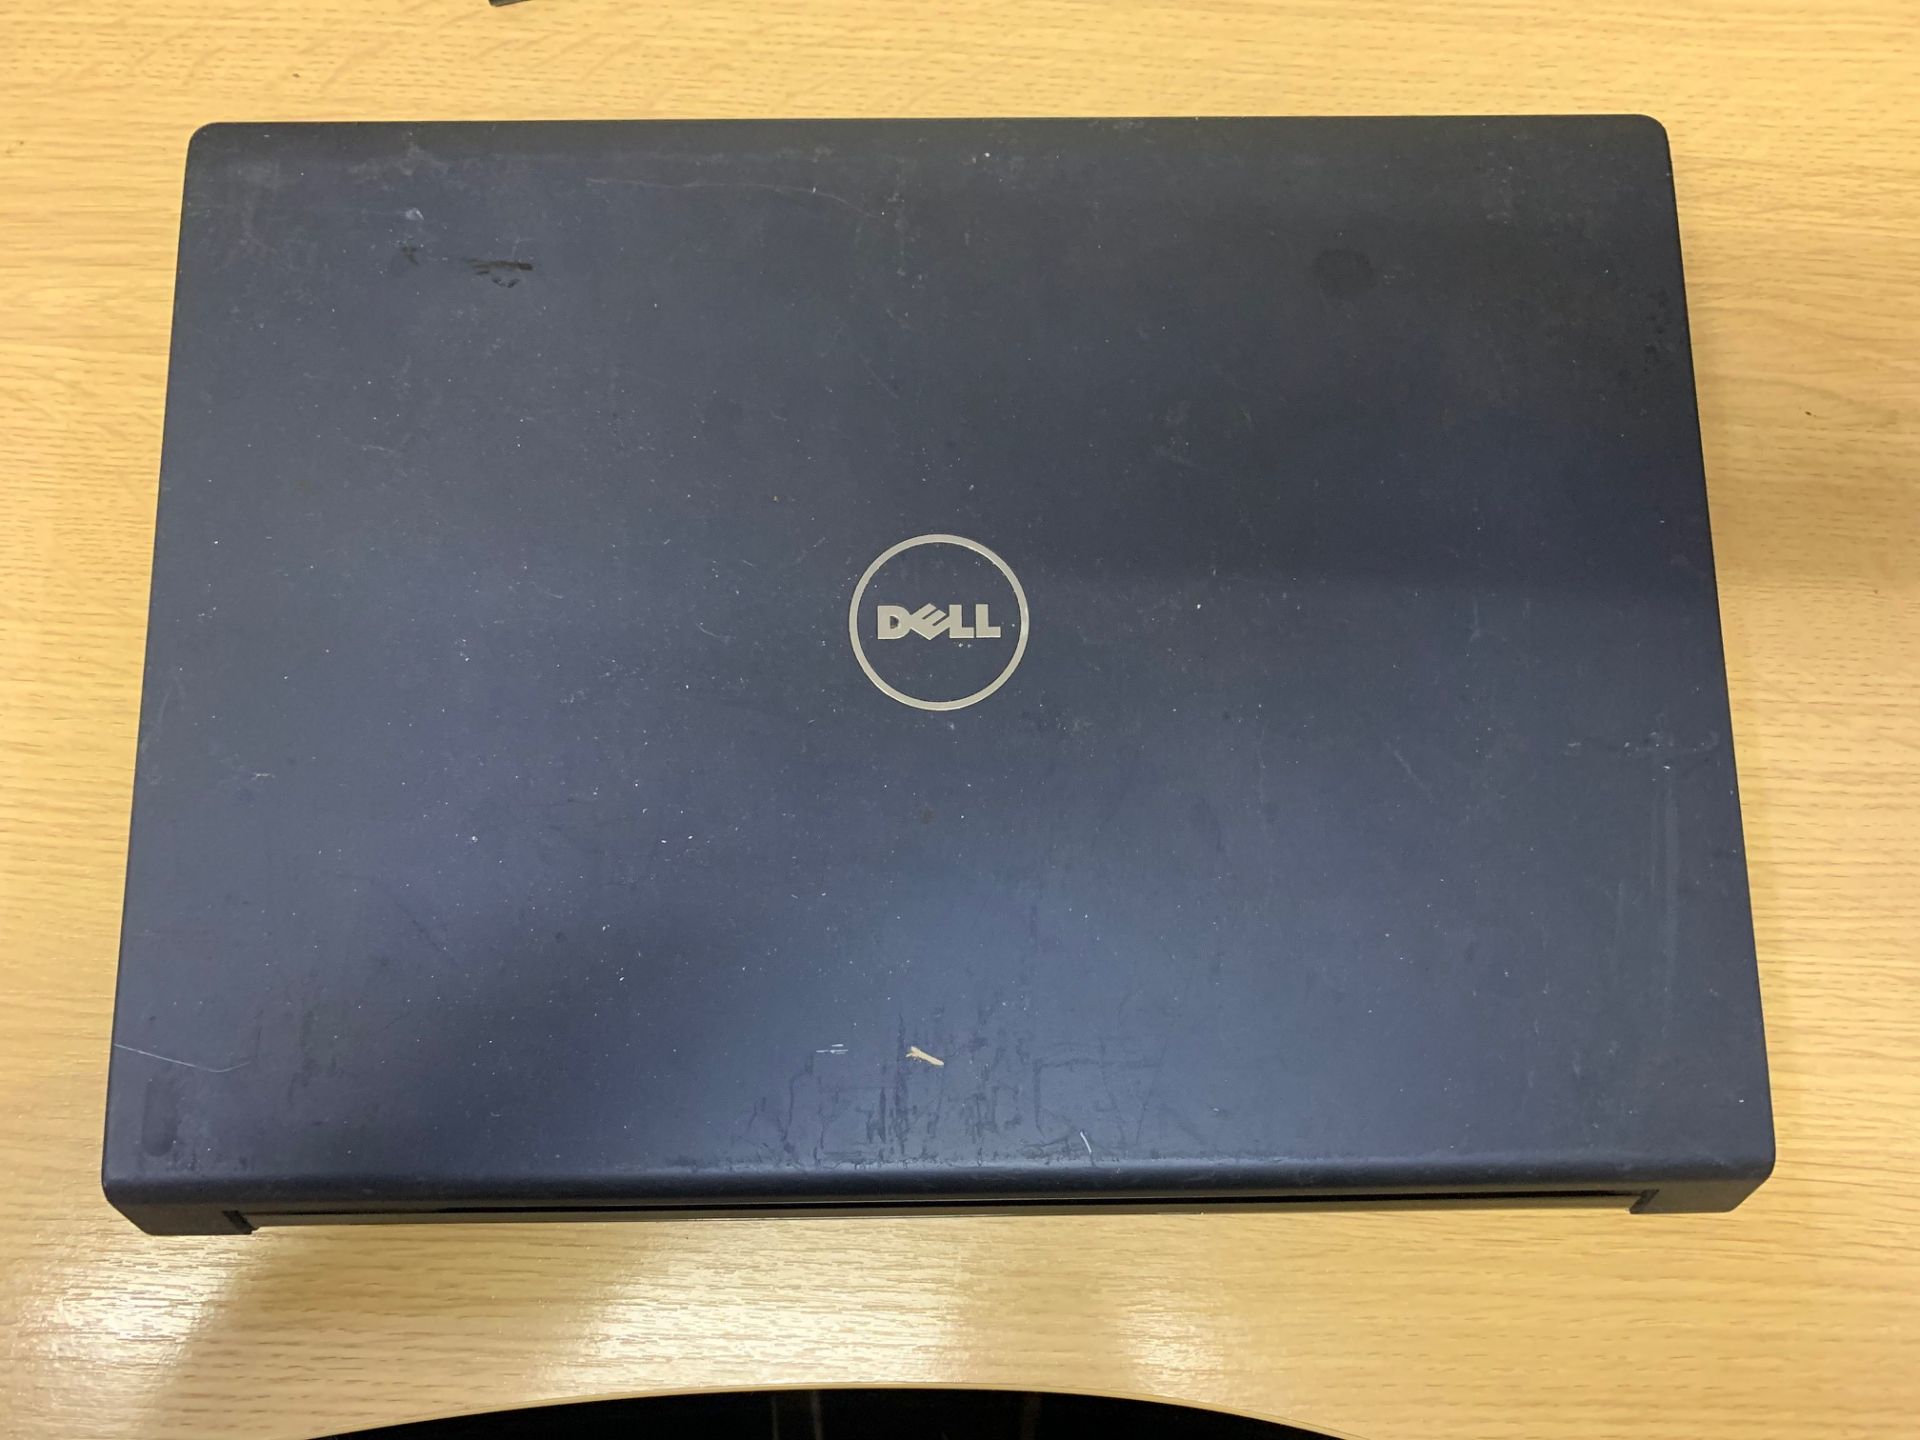 Dell Studio 1737 Laptop - 250GB Hard Drive, 3GB RAM, 17" Screen, Windows Vista & Charger - Image 2 of 3